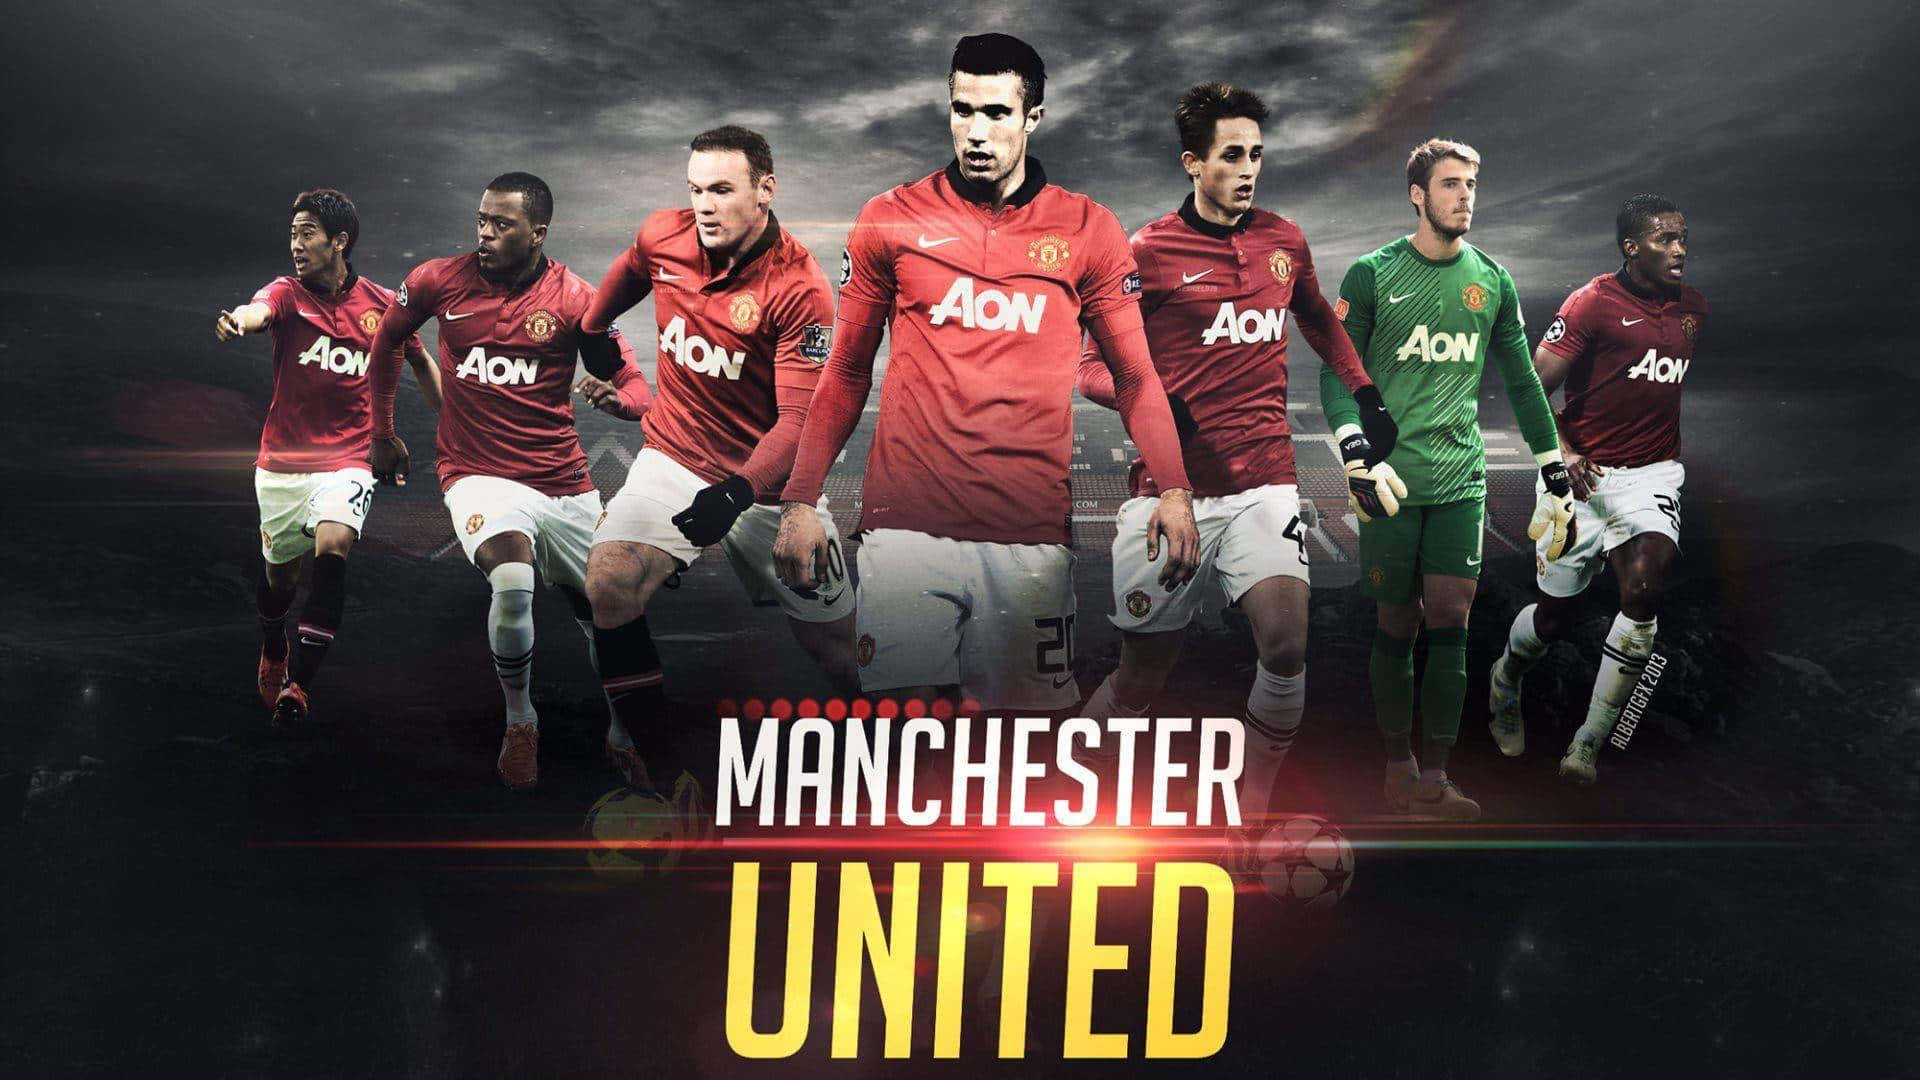 Den Manchester United Team Wallpaper. Wallpaper